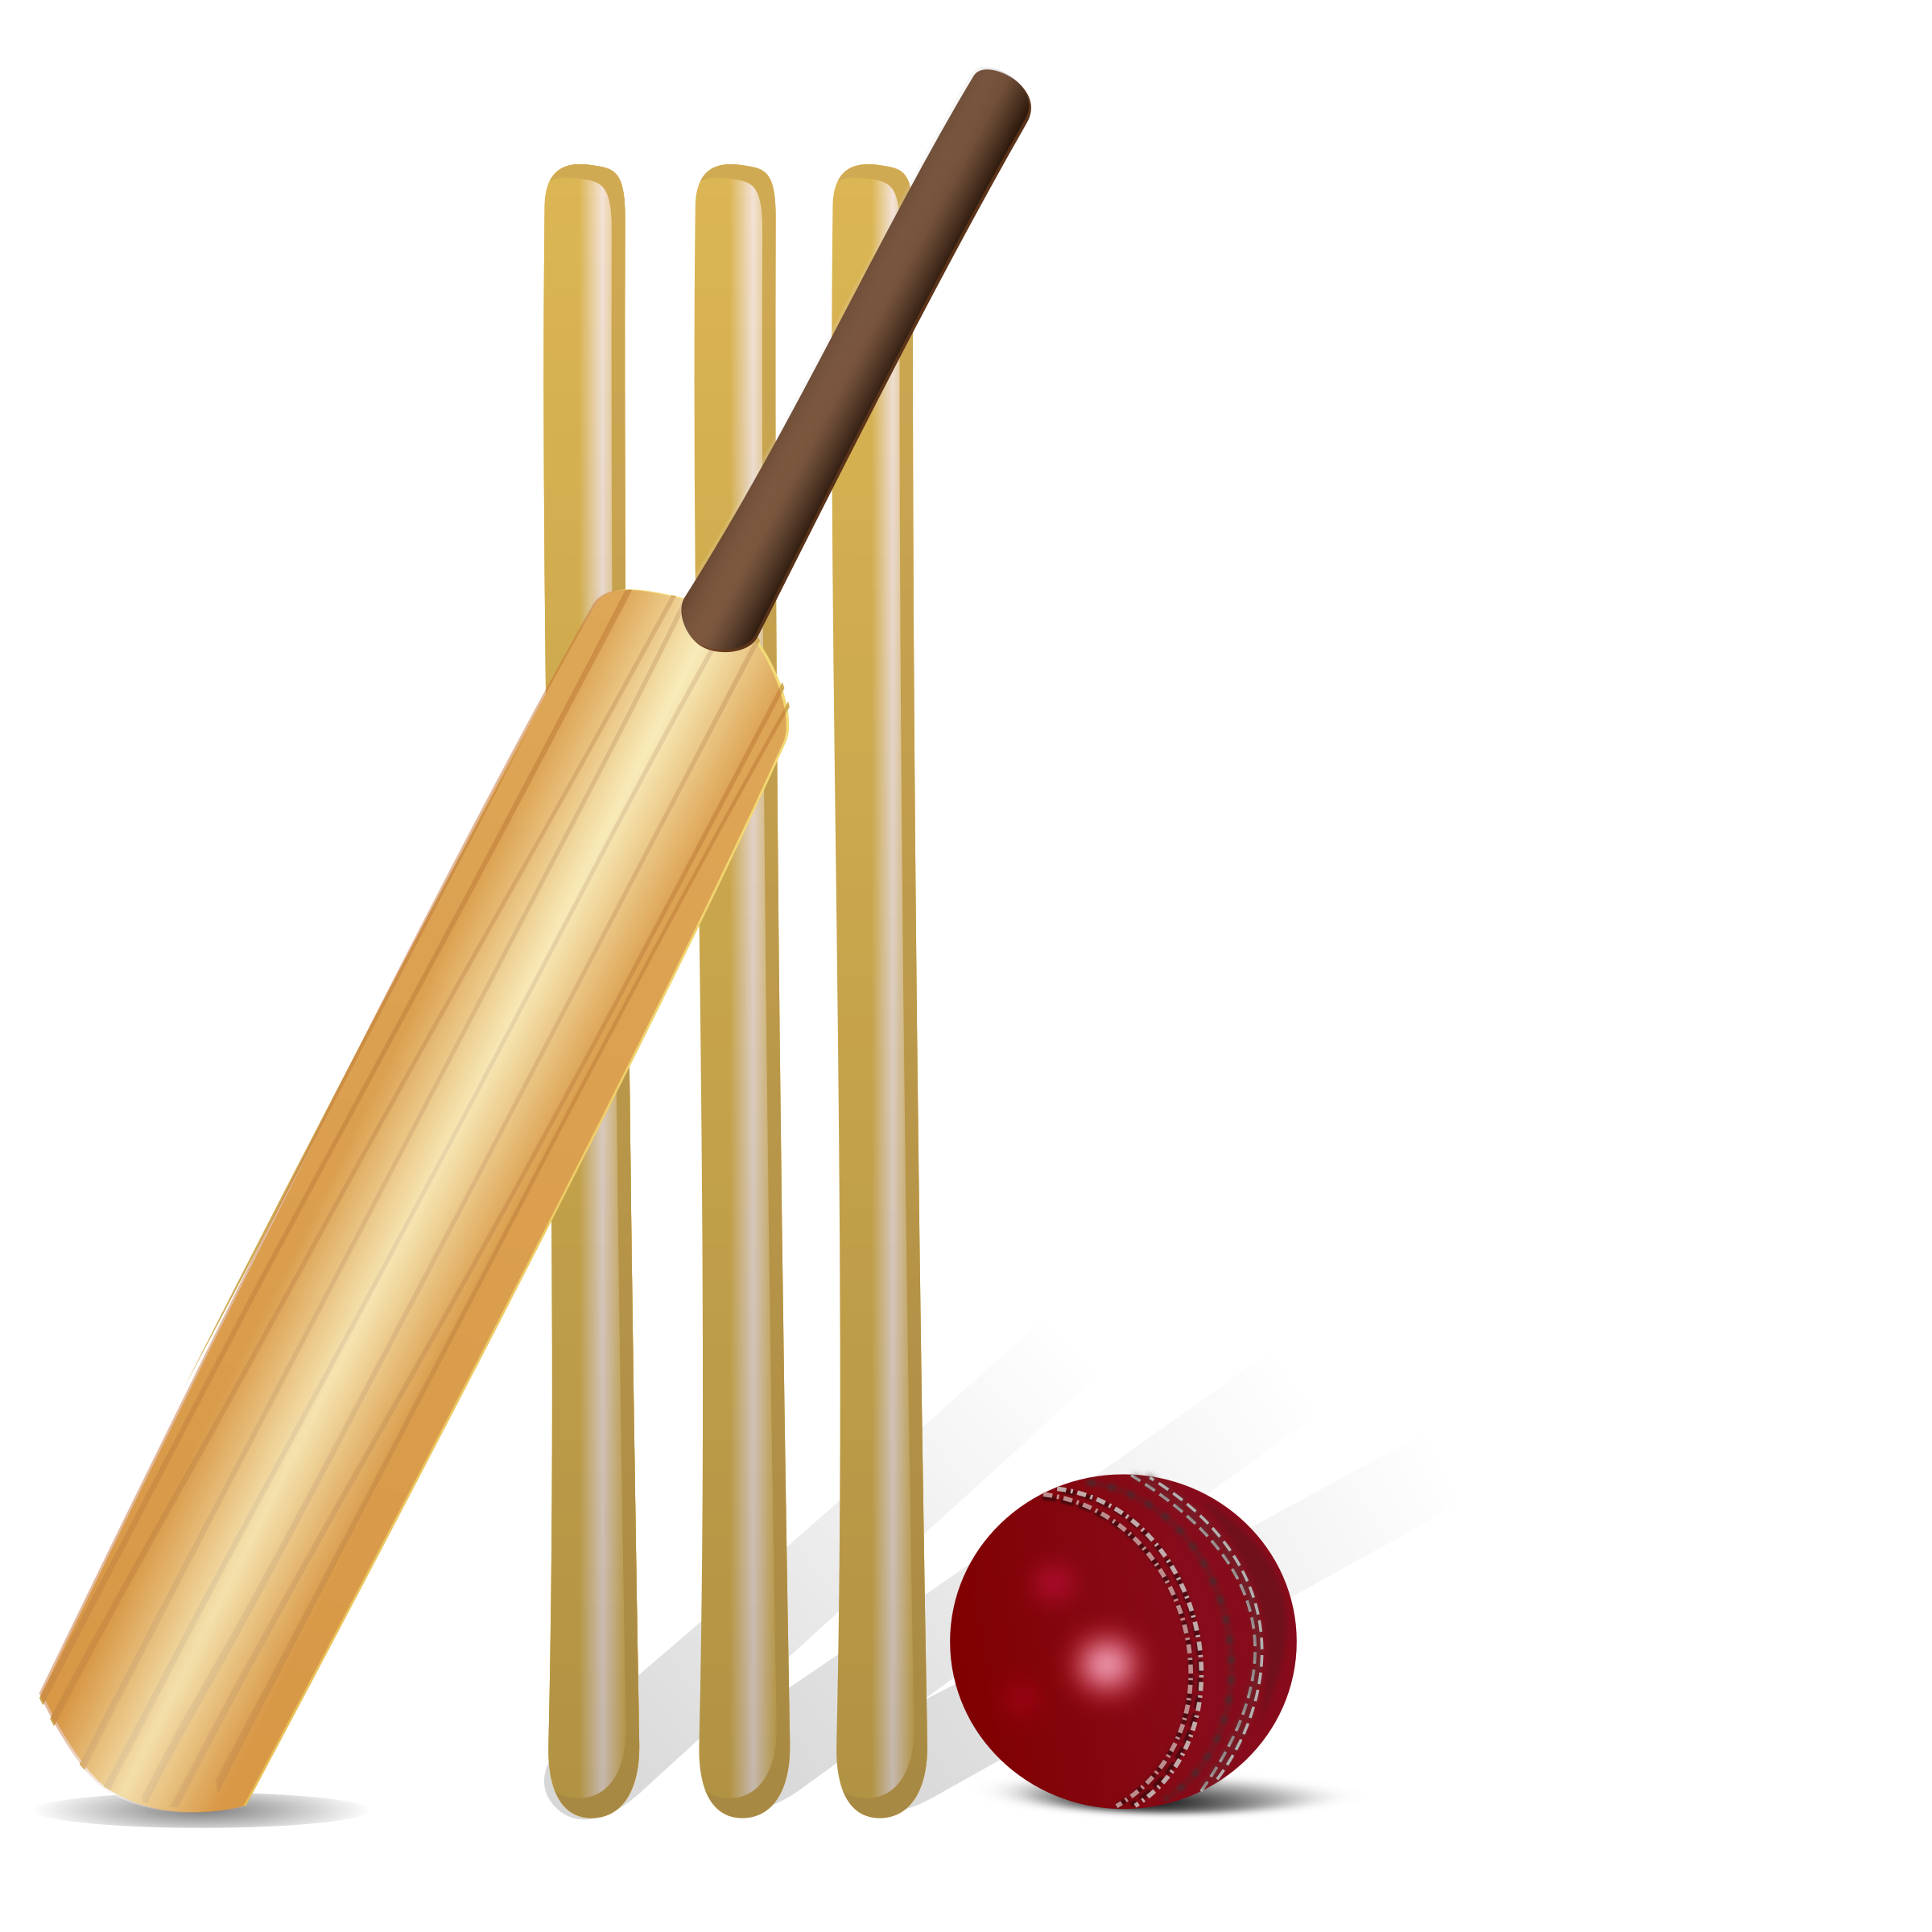 Cricket wicket bat and ball